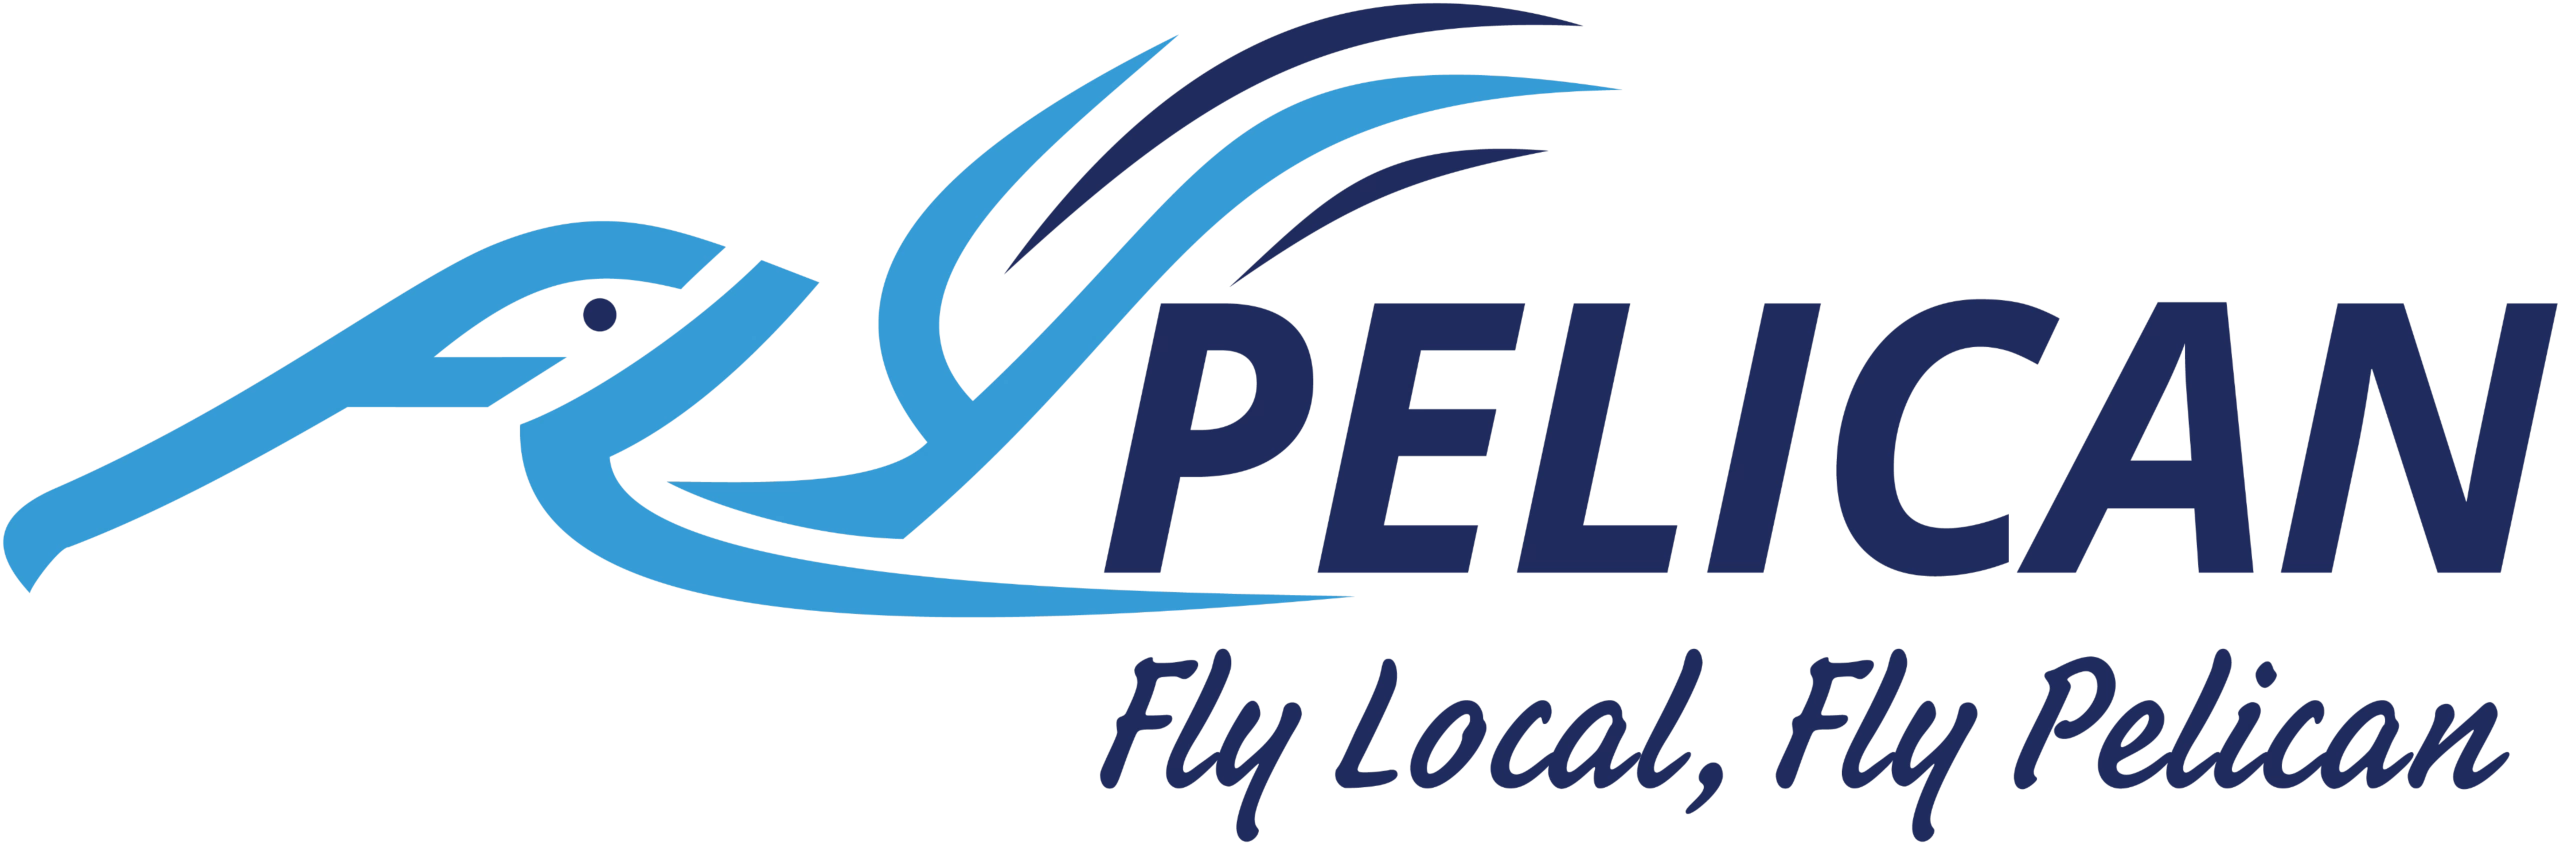 Fly Pelican Logo